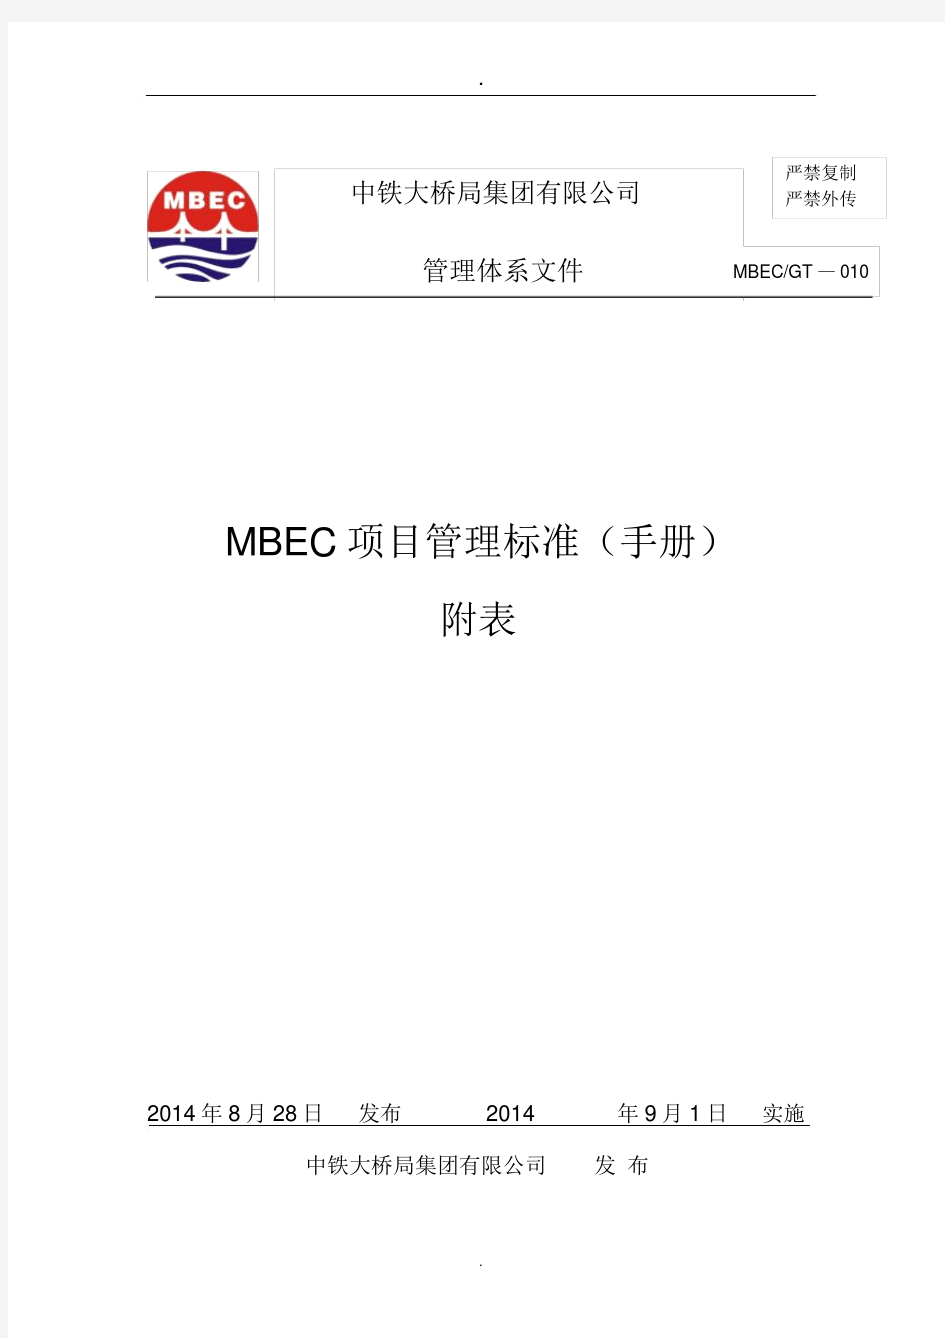 《mbec项目管理手册》(v0)附表